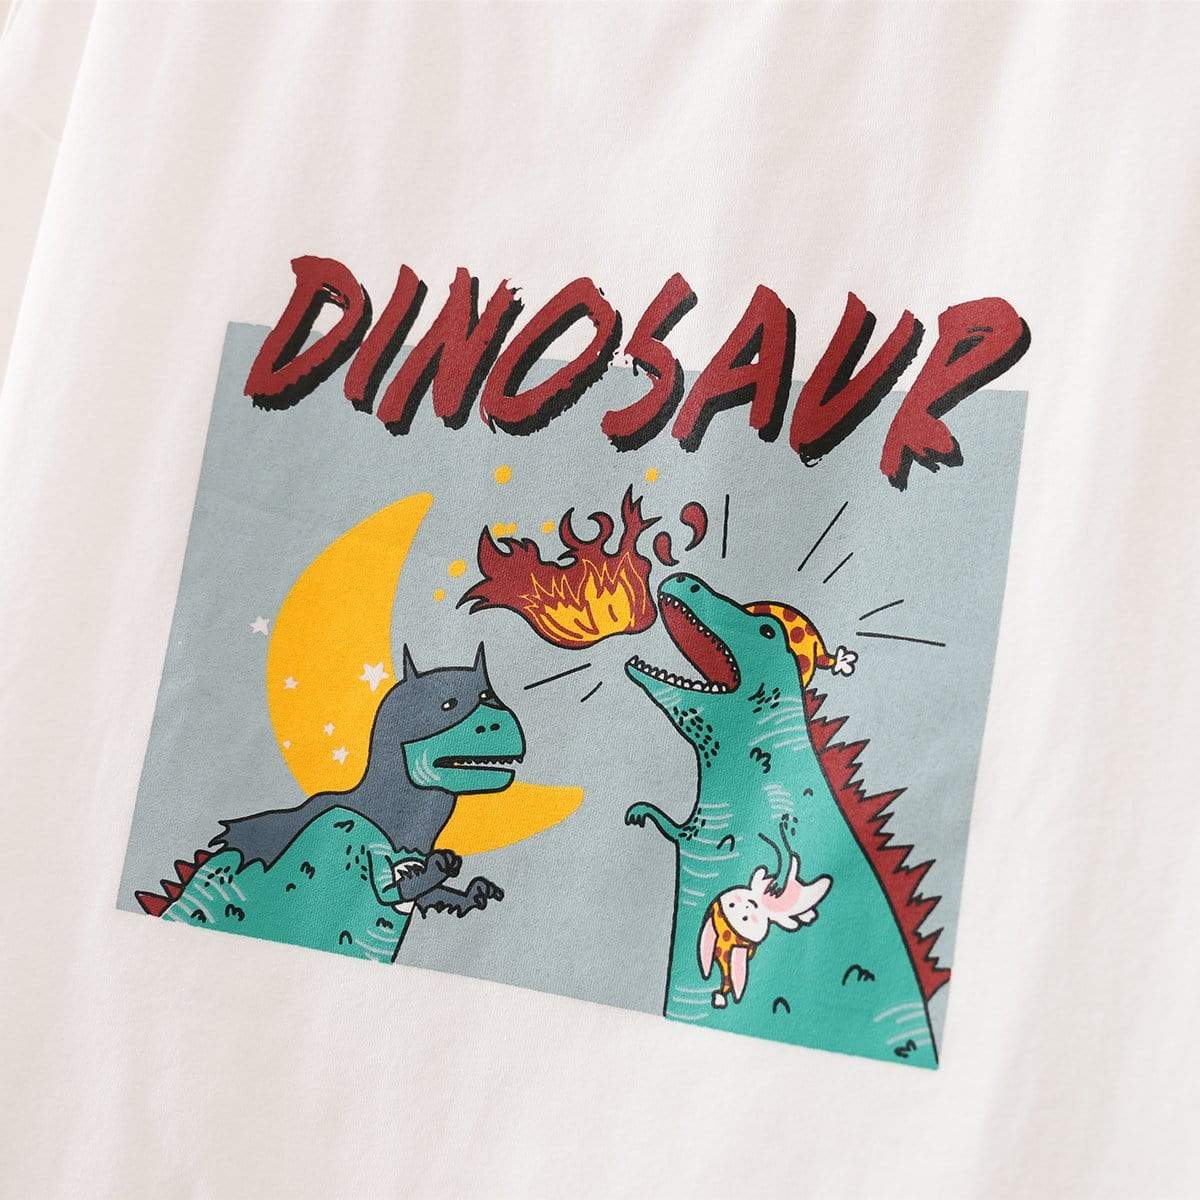 Kawaiifashion - Camisetas con estampado de dinosaurio encantador para mujer, talla única